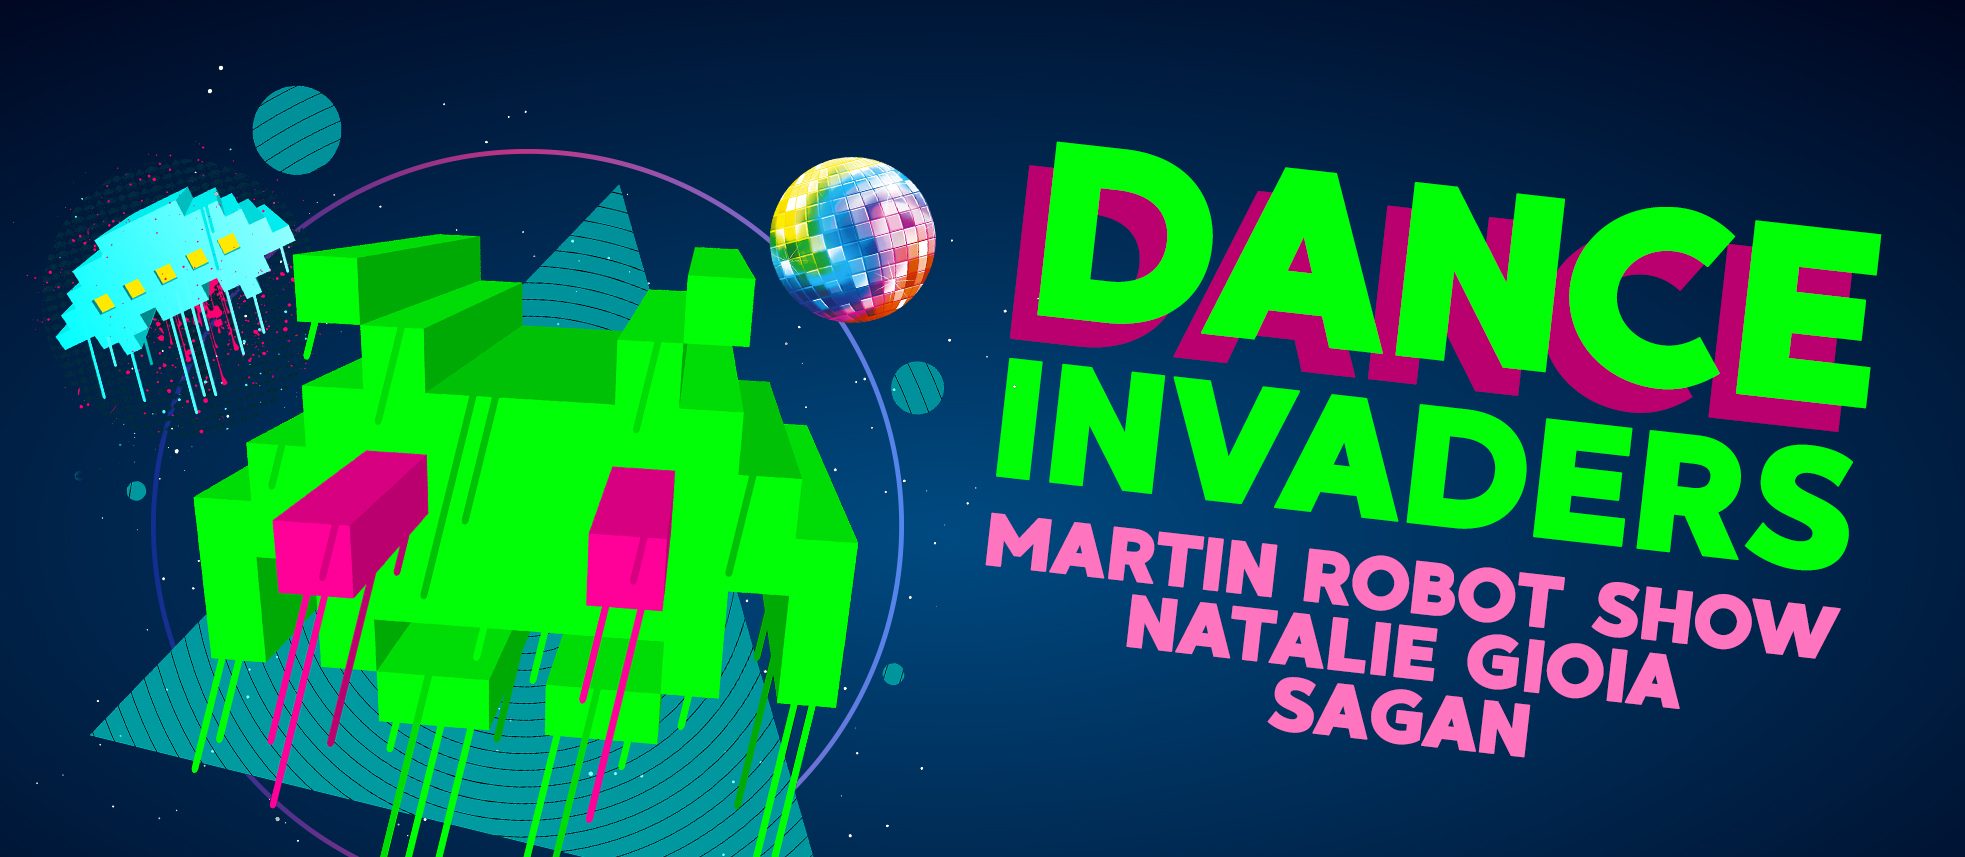 Dance invaders. Sagan, Natalie Gioia, Martin Robot show.